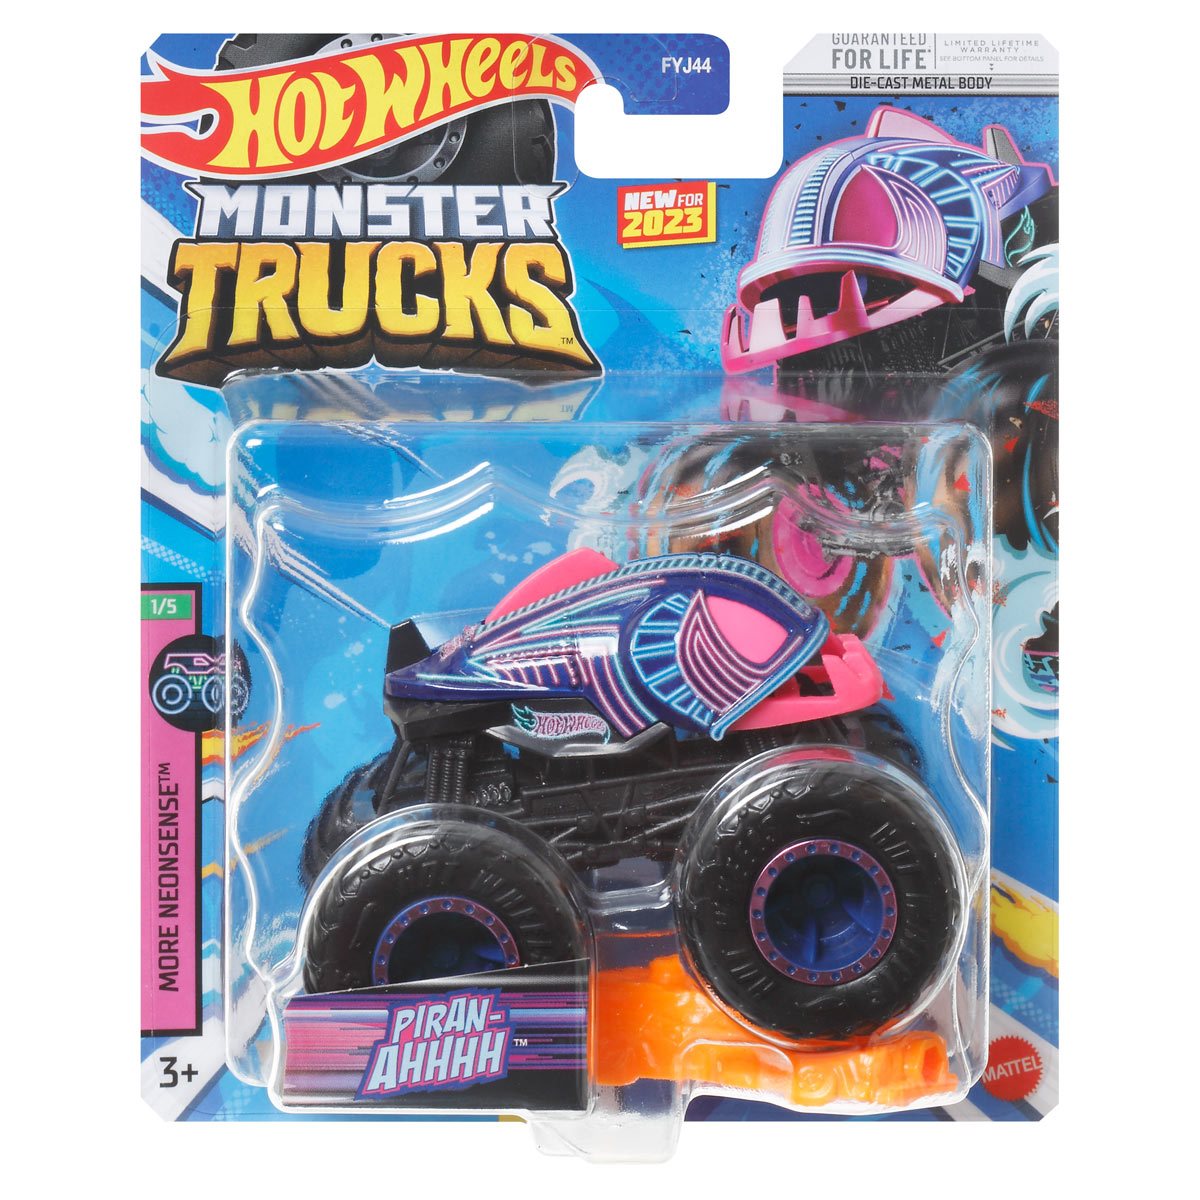 1:64 of Hot monster Scale hot 2 Trucks Vehicle 2023 Mix 8, wheels truck Case Monster Wheels